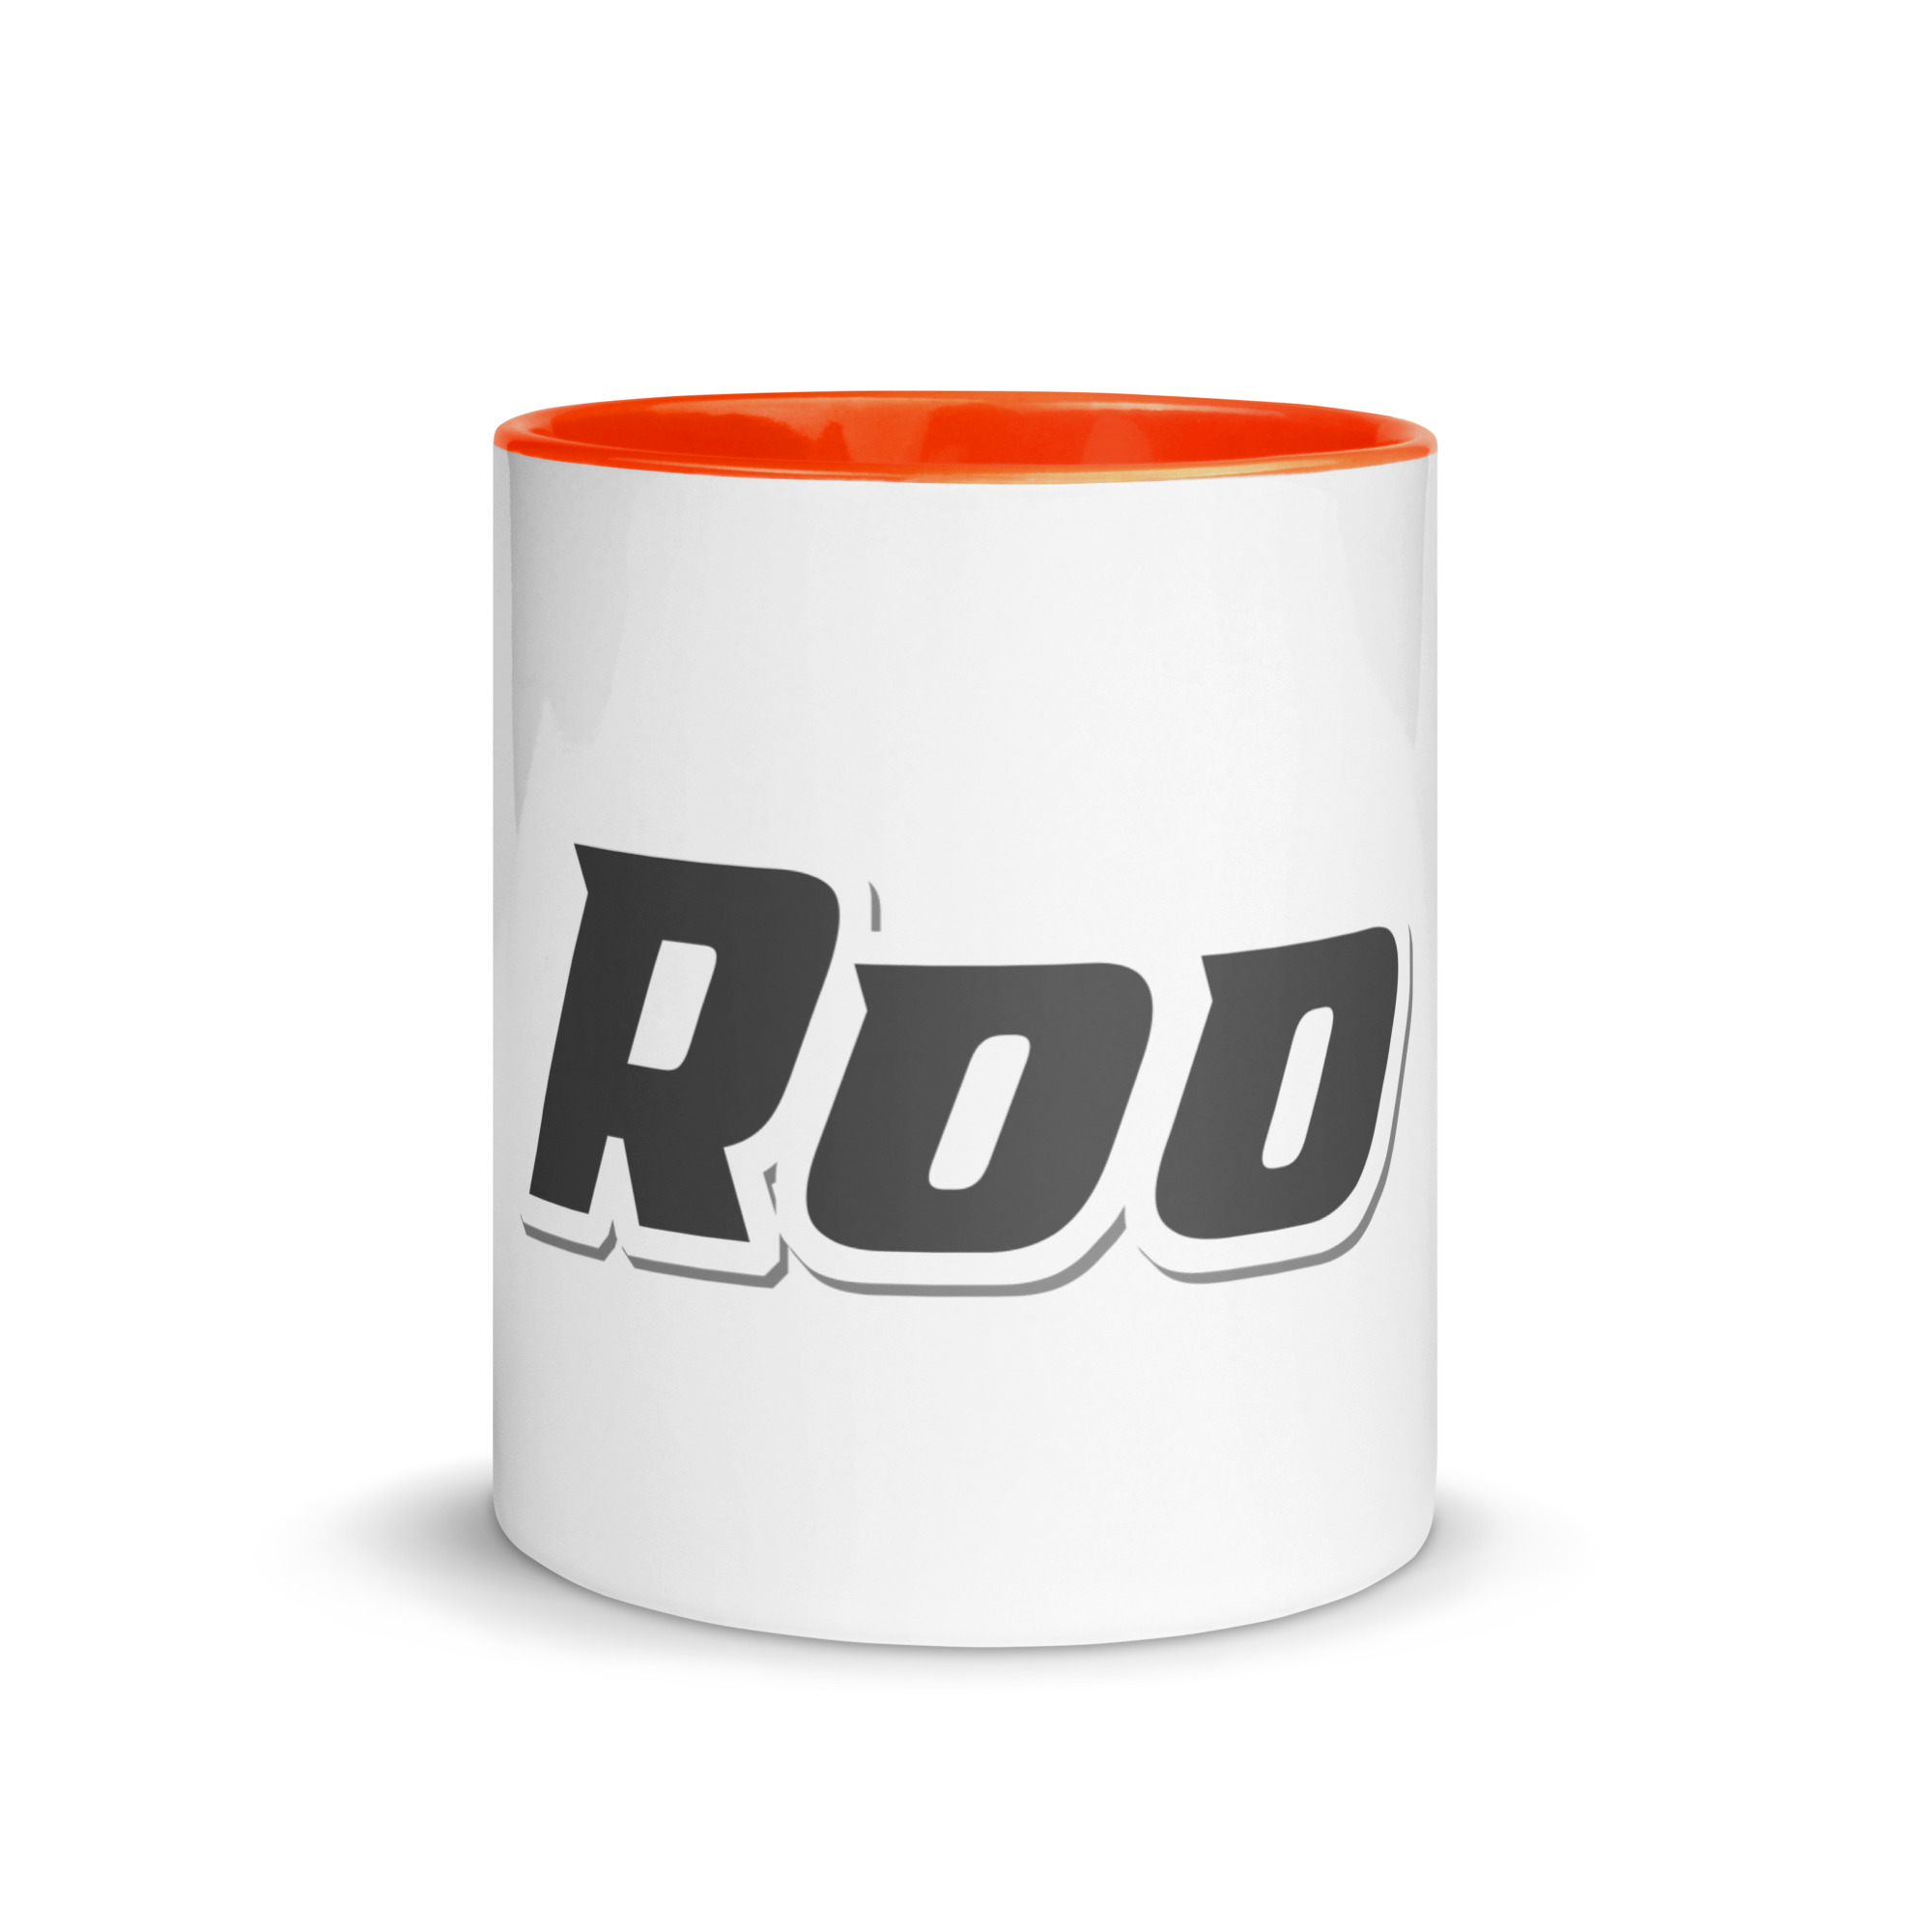 white-ceramic-mug-with-color-inside-orange-11-oz-front-6525b6484c67b.jpg